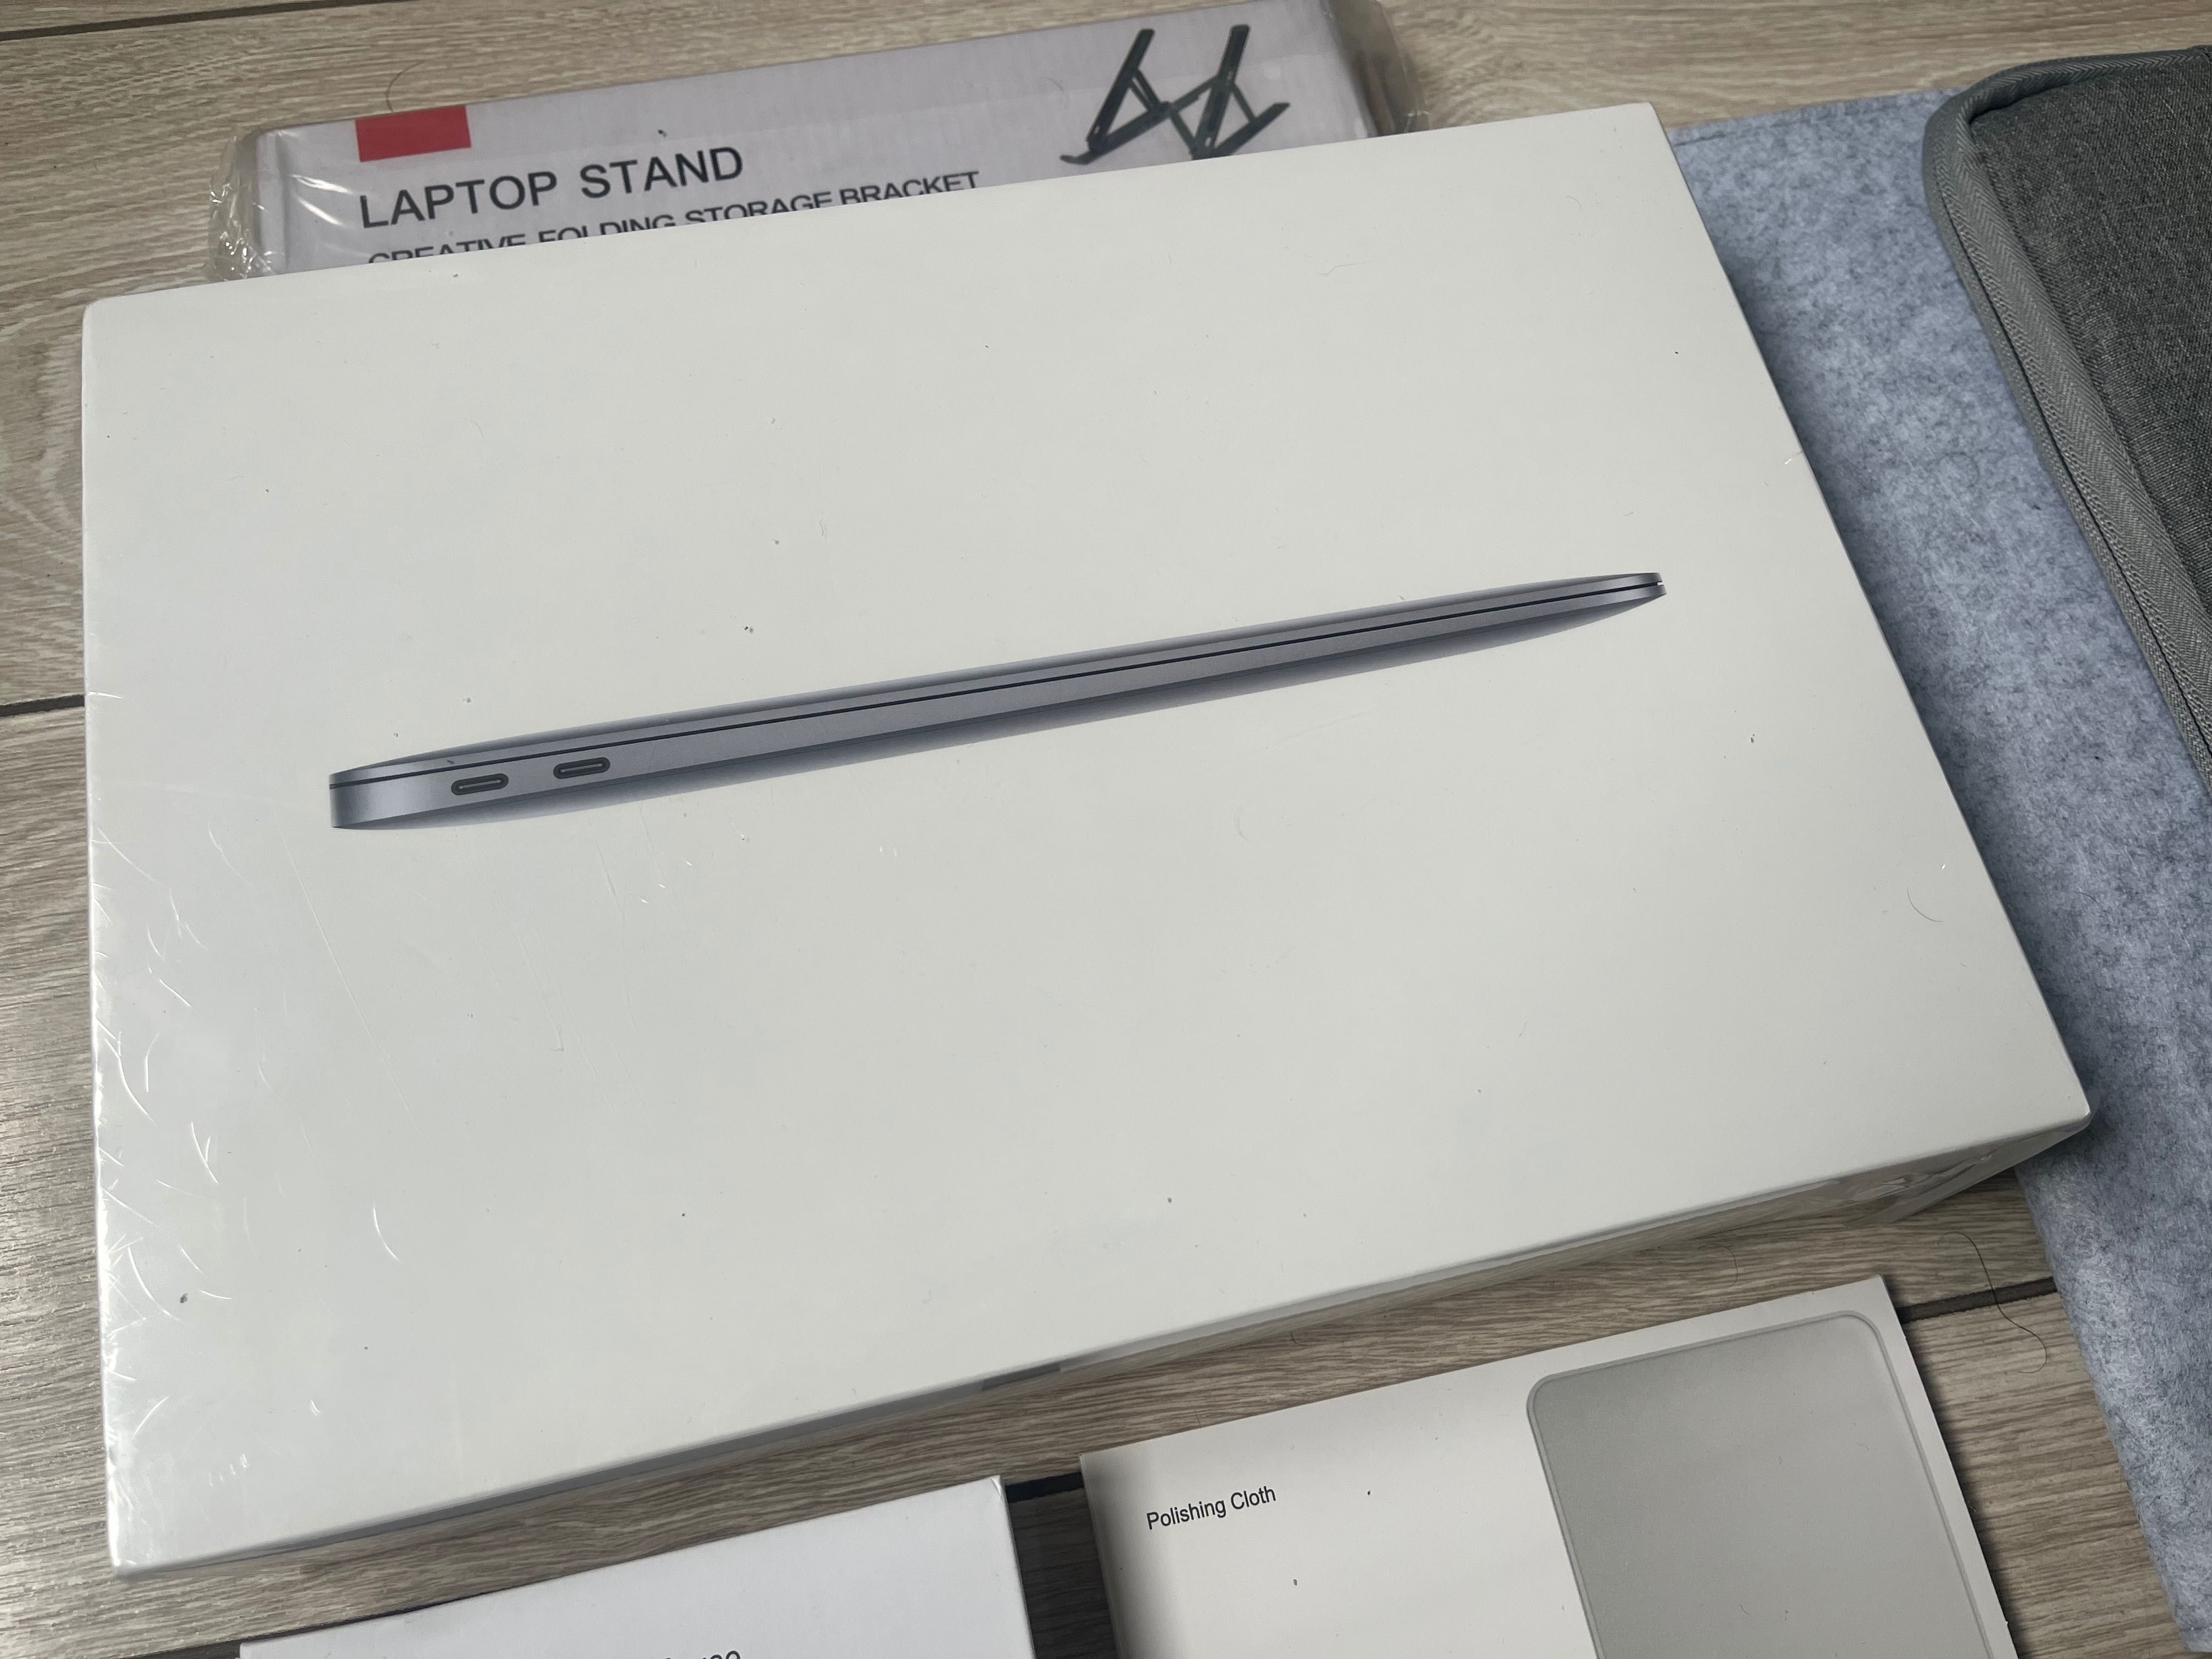 MacBook Air 13 M1 В идеале